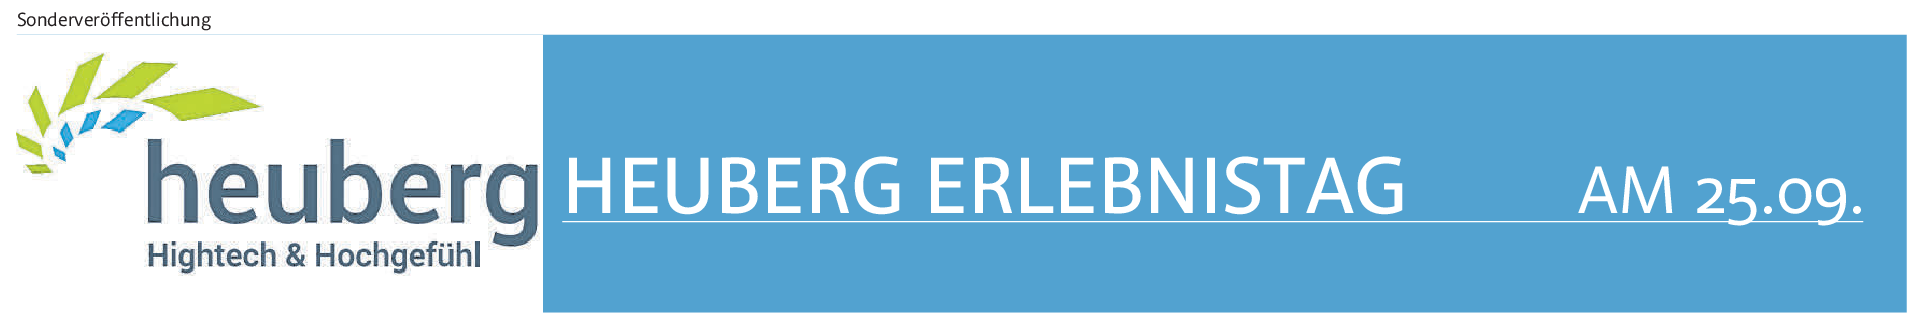 Verein Heuberg aktiv in Wehingen: Auf dem Heuberg ist was los